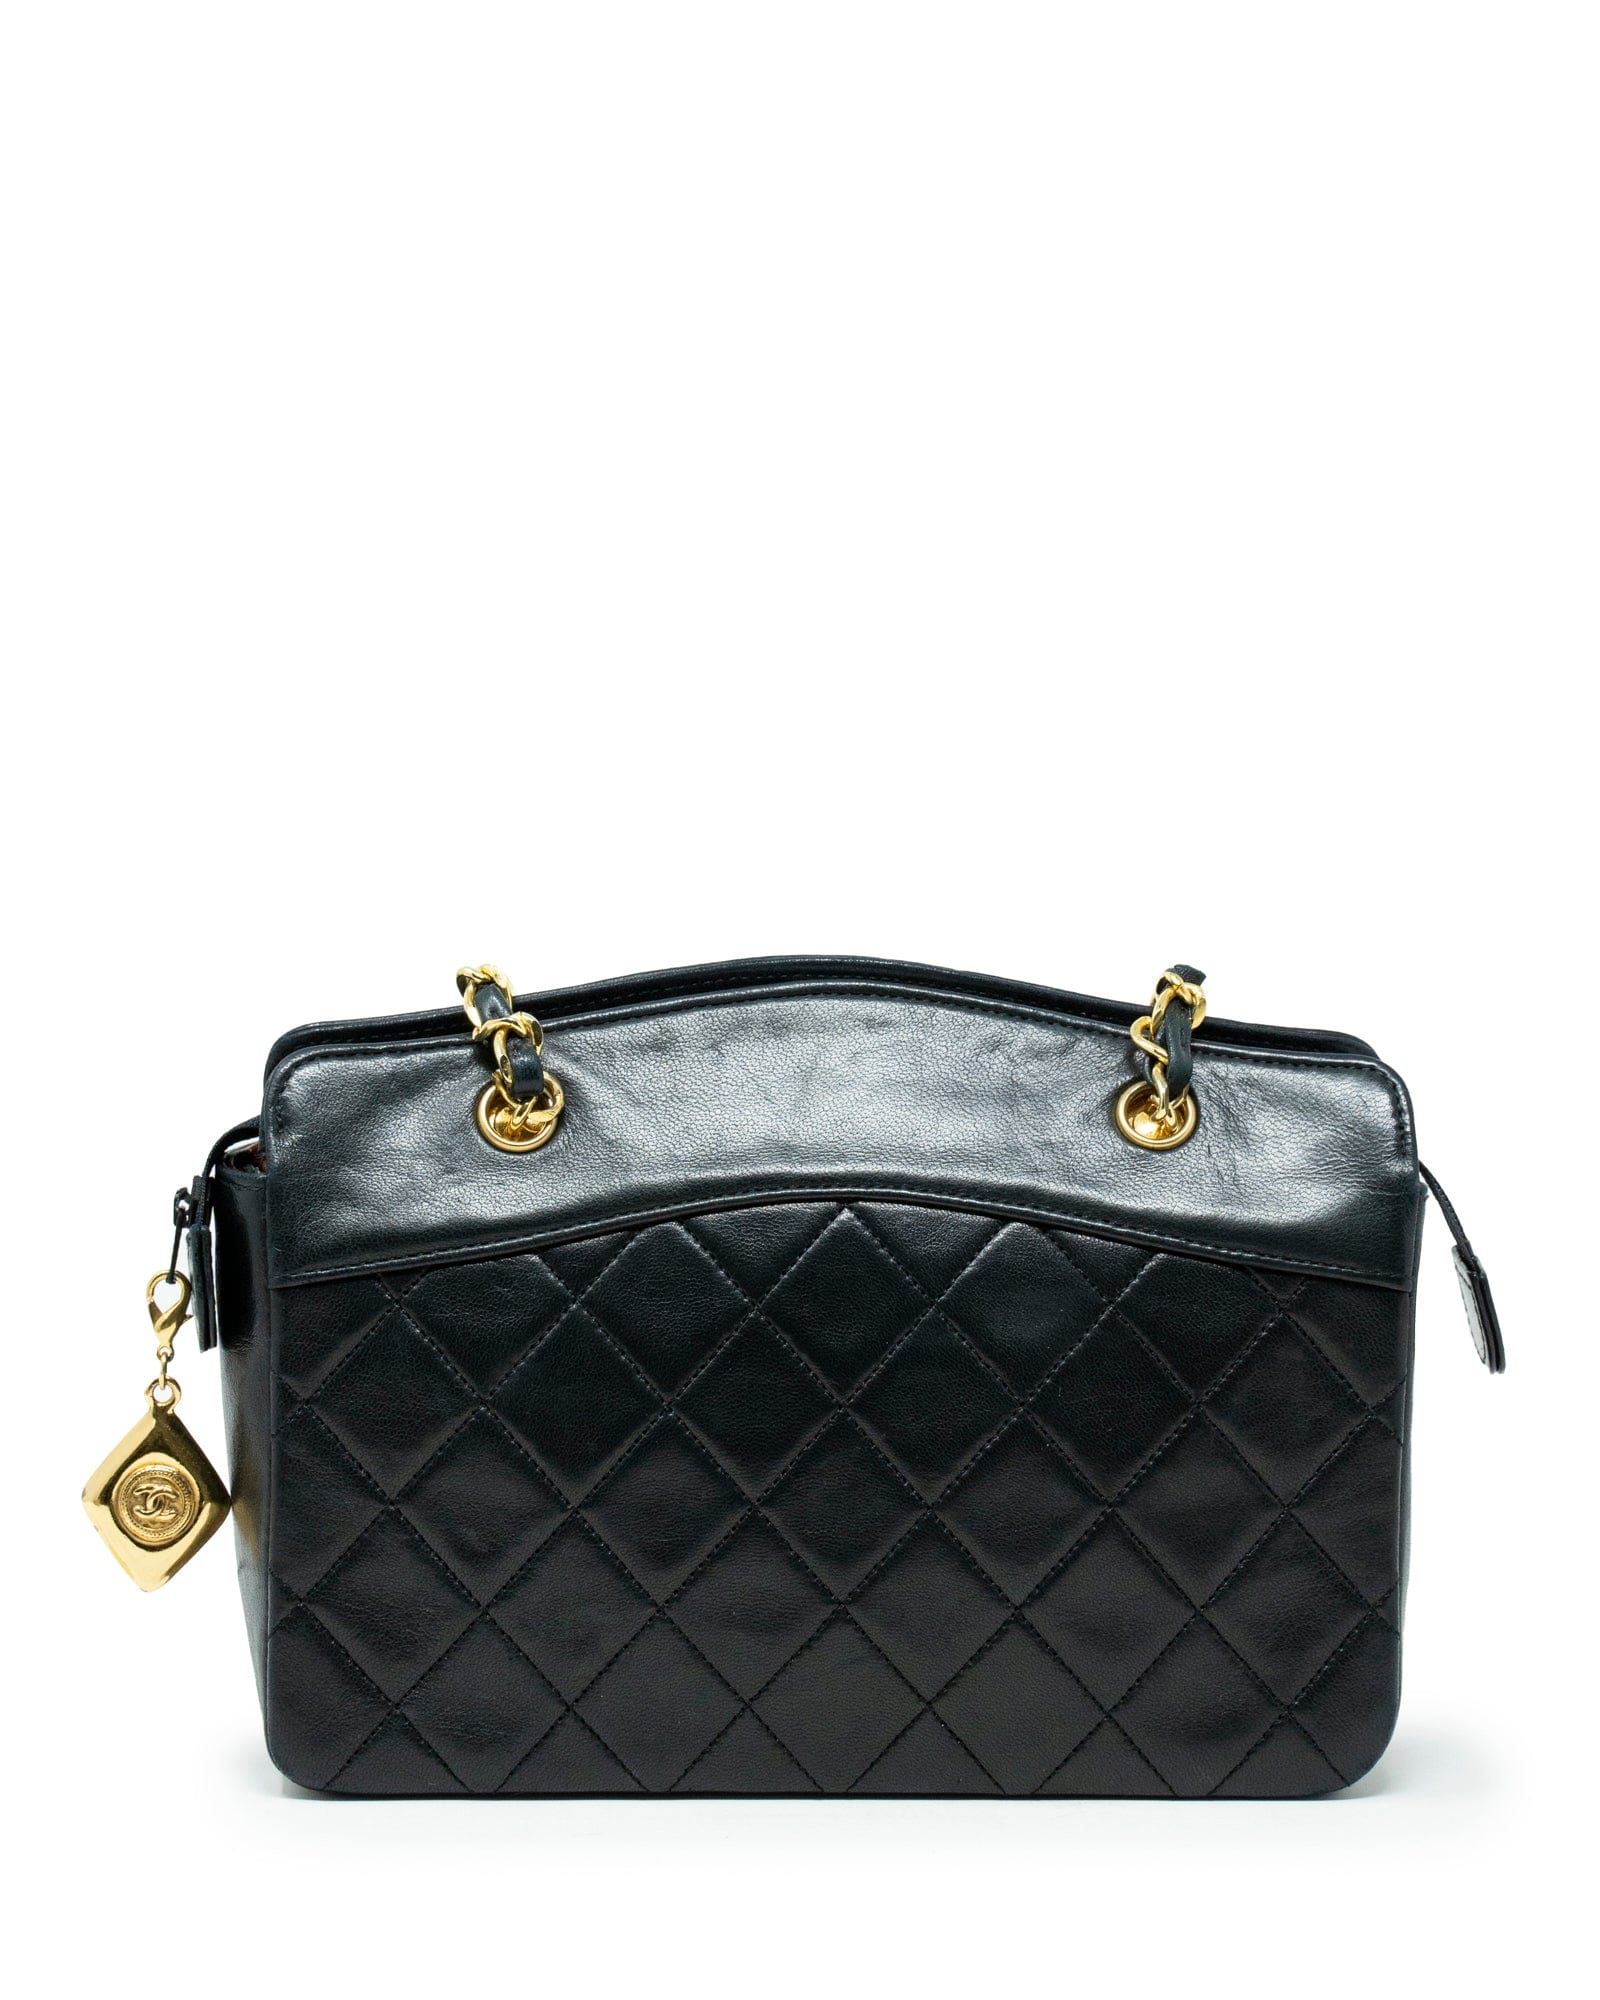 Chanel Black Leather Tote Bag - 210 For Sale on 1stDibs